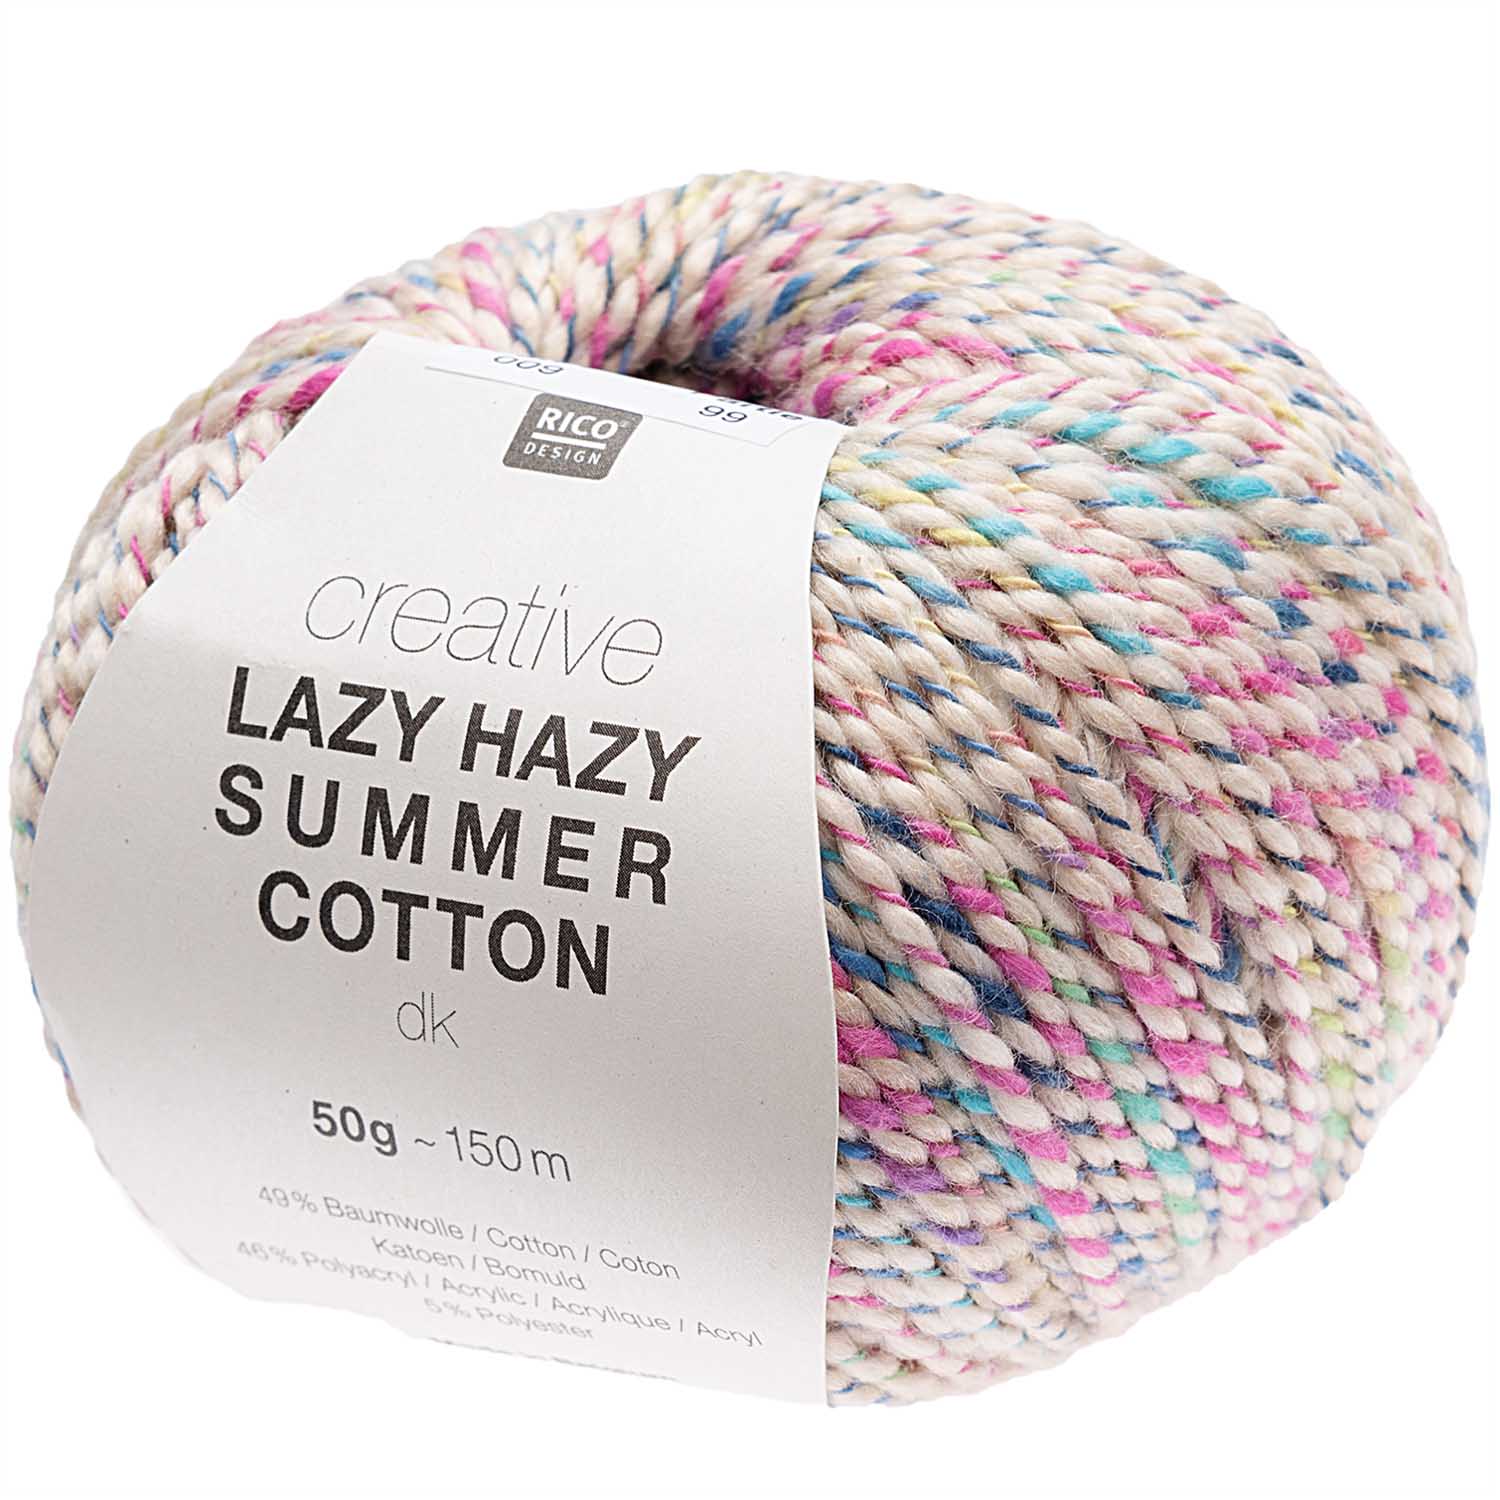 Creative Lazy Hazy Summer Cotton 50g 145m